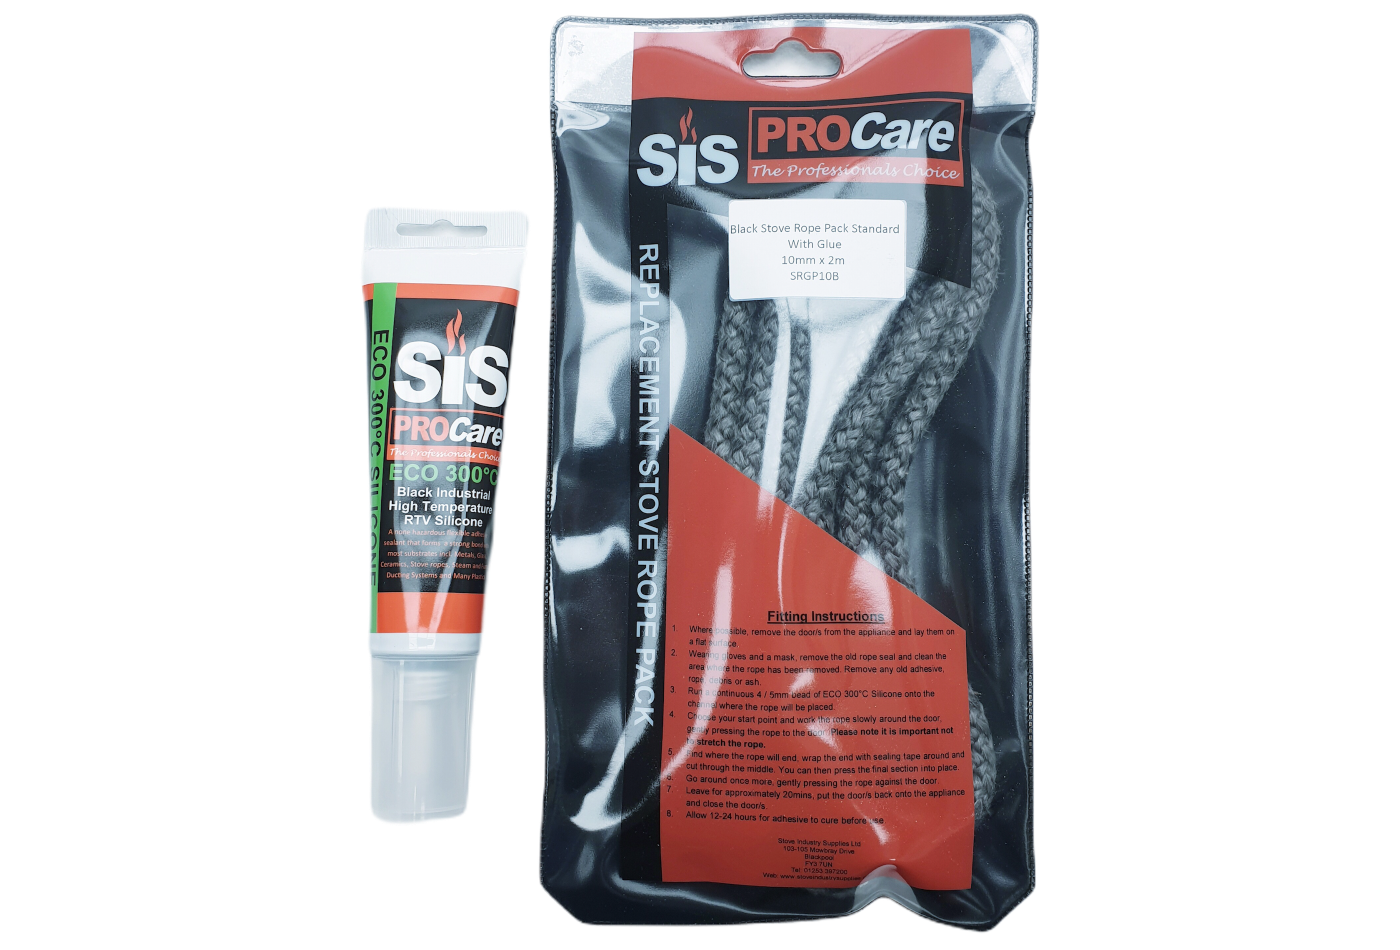 SiS Procare Black 10 milimetre x 2 metre Black Standard Stove Rope & 80 millilitre Rope Glue Pack - product code SRGP10B